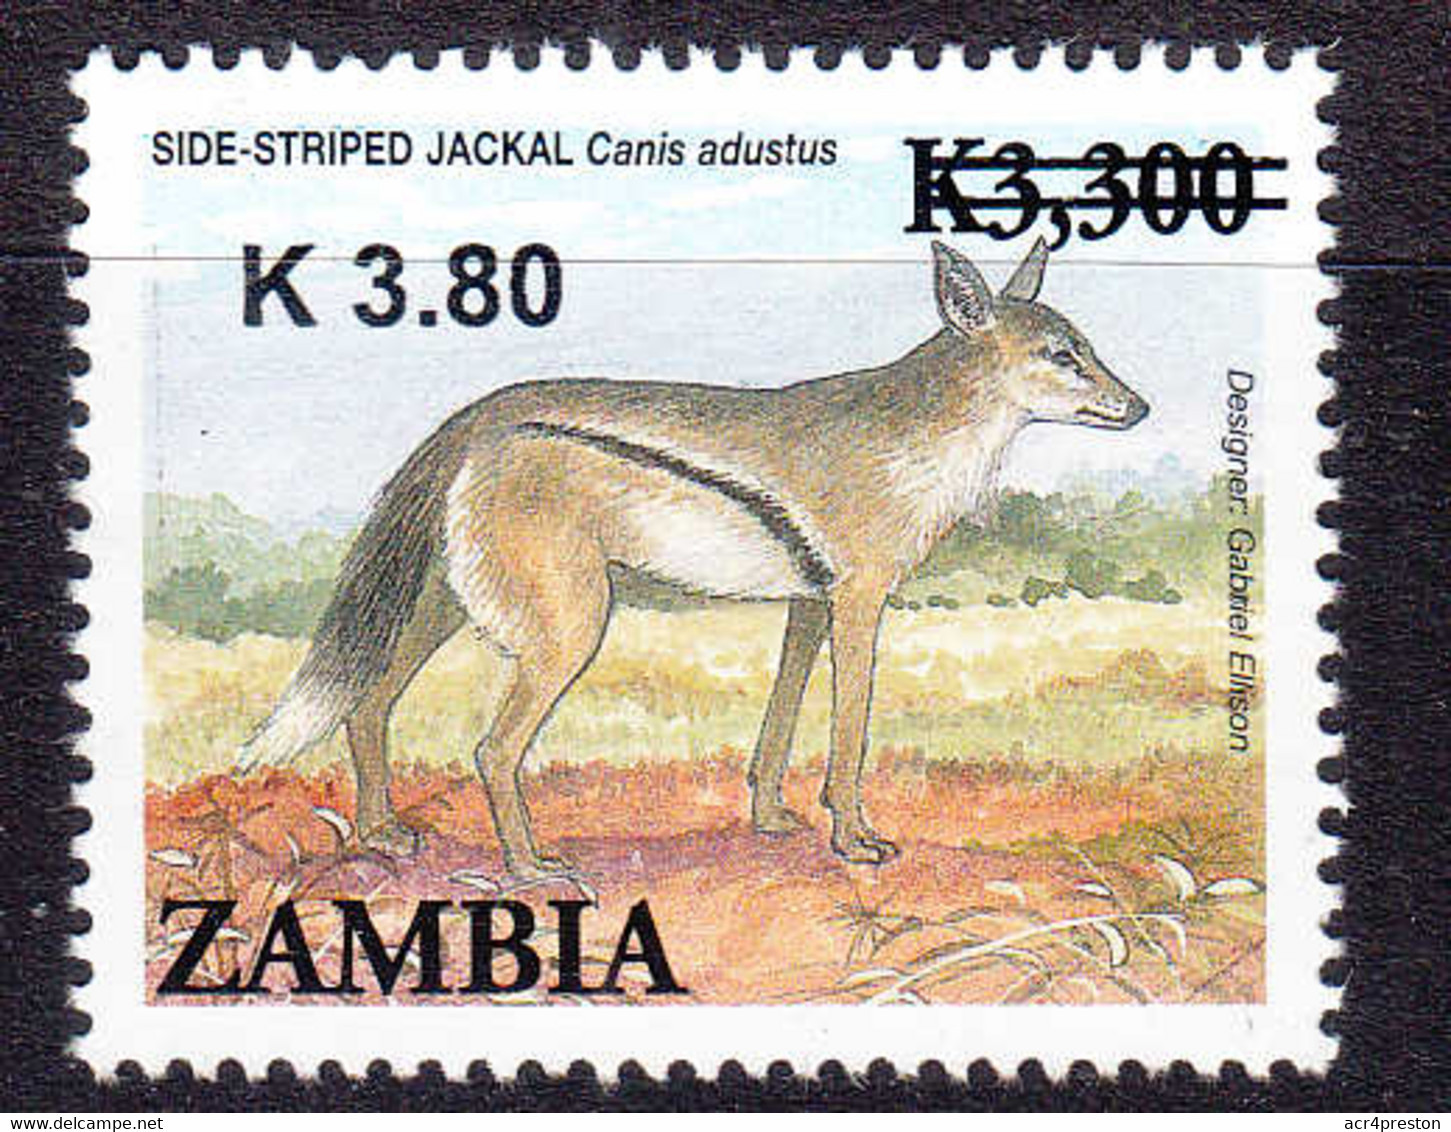 Zm1129 ZAMBIA 2014, NEW ISSUE K3.80 On K3,300 Animals MNH - Zambie (1965-...)